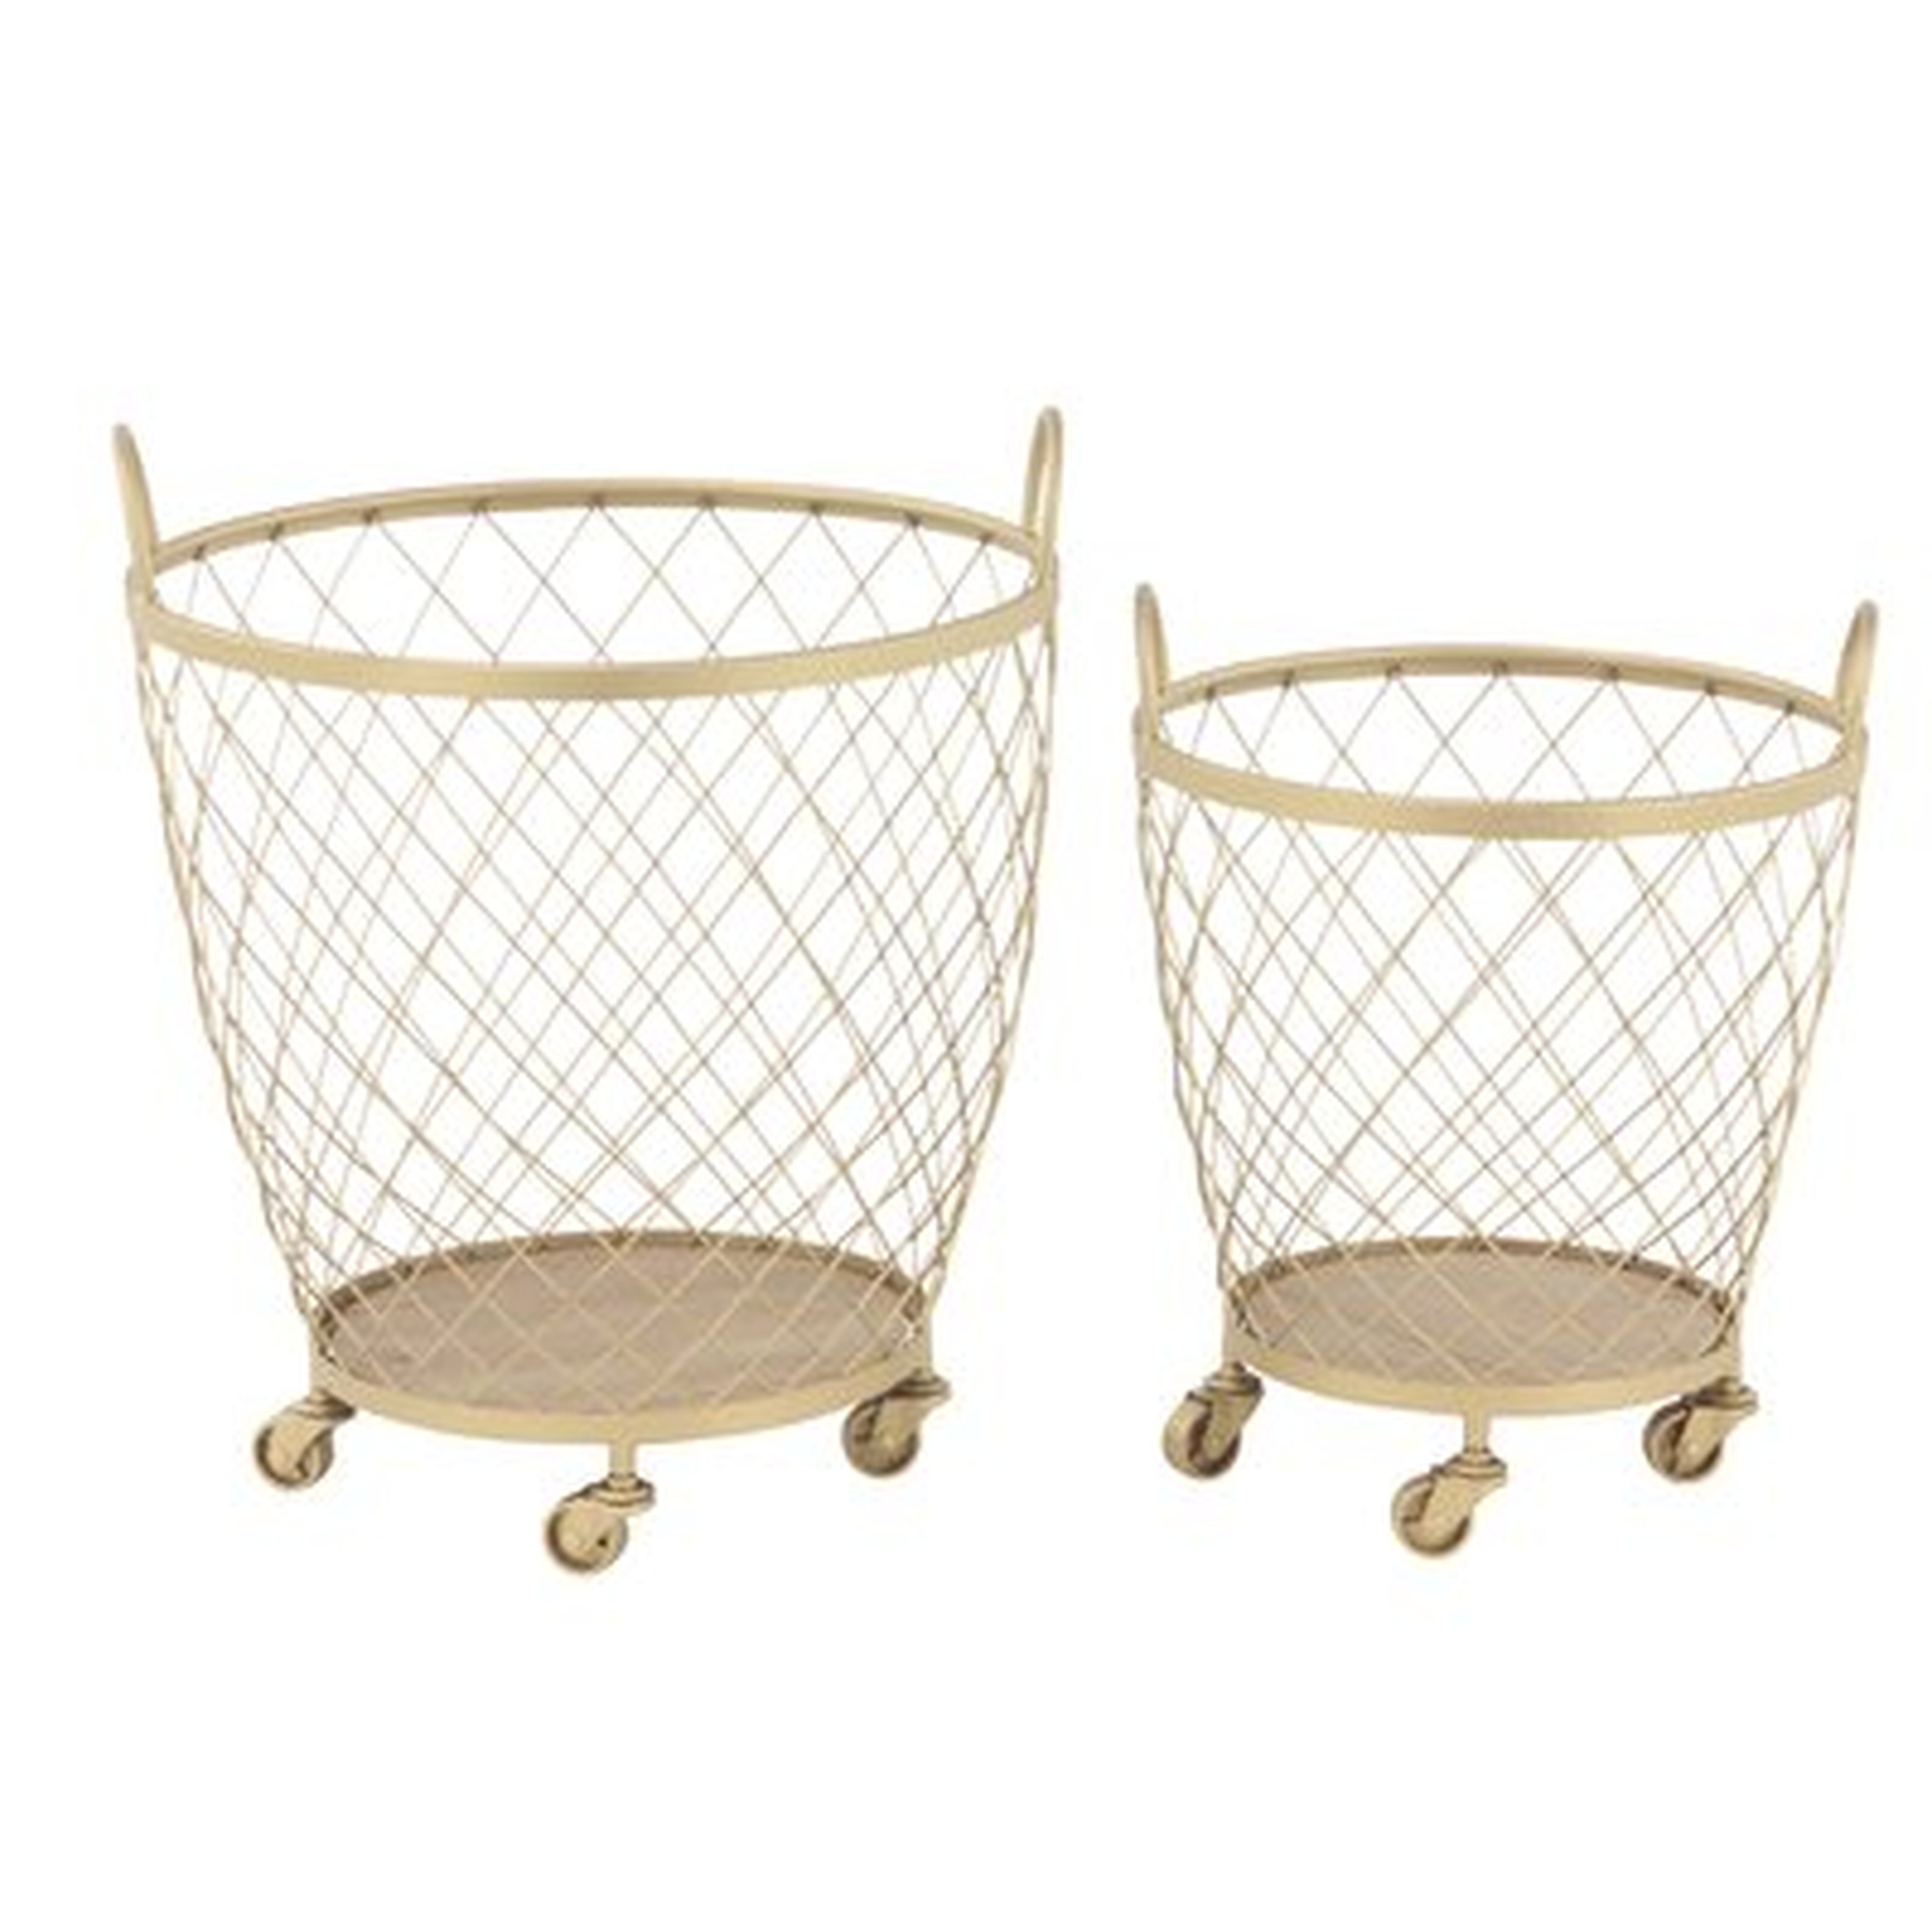 Modern Diamond Weave Round Basket Set with Wheels - Wayfair